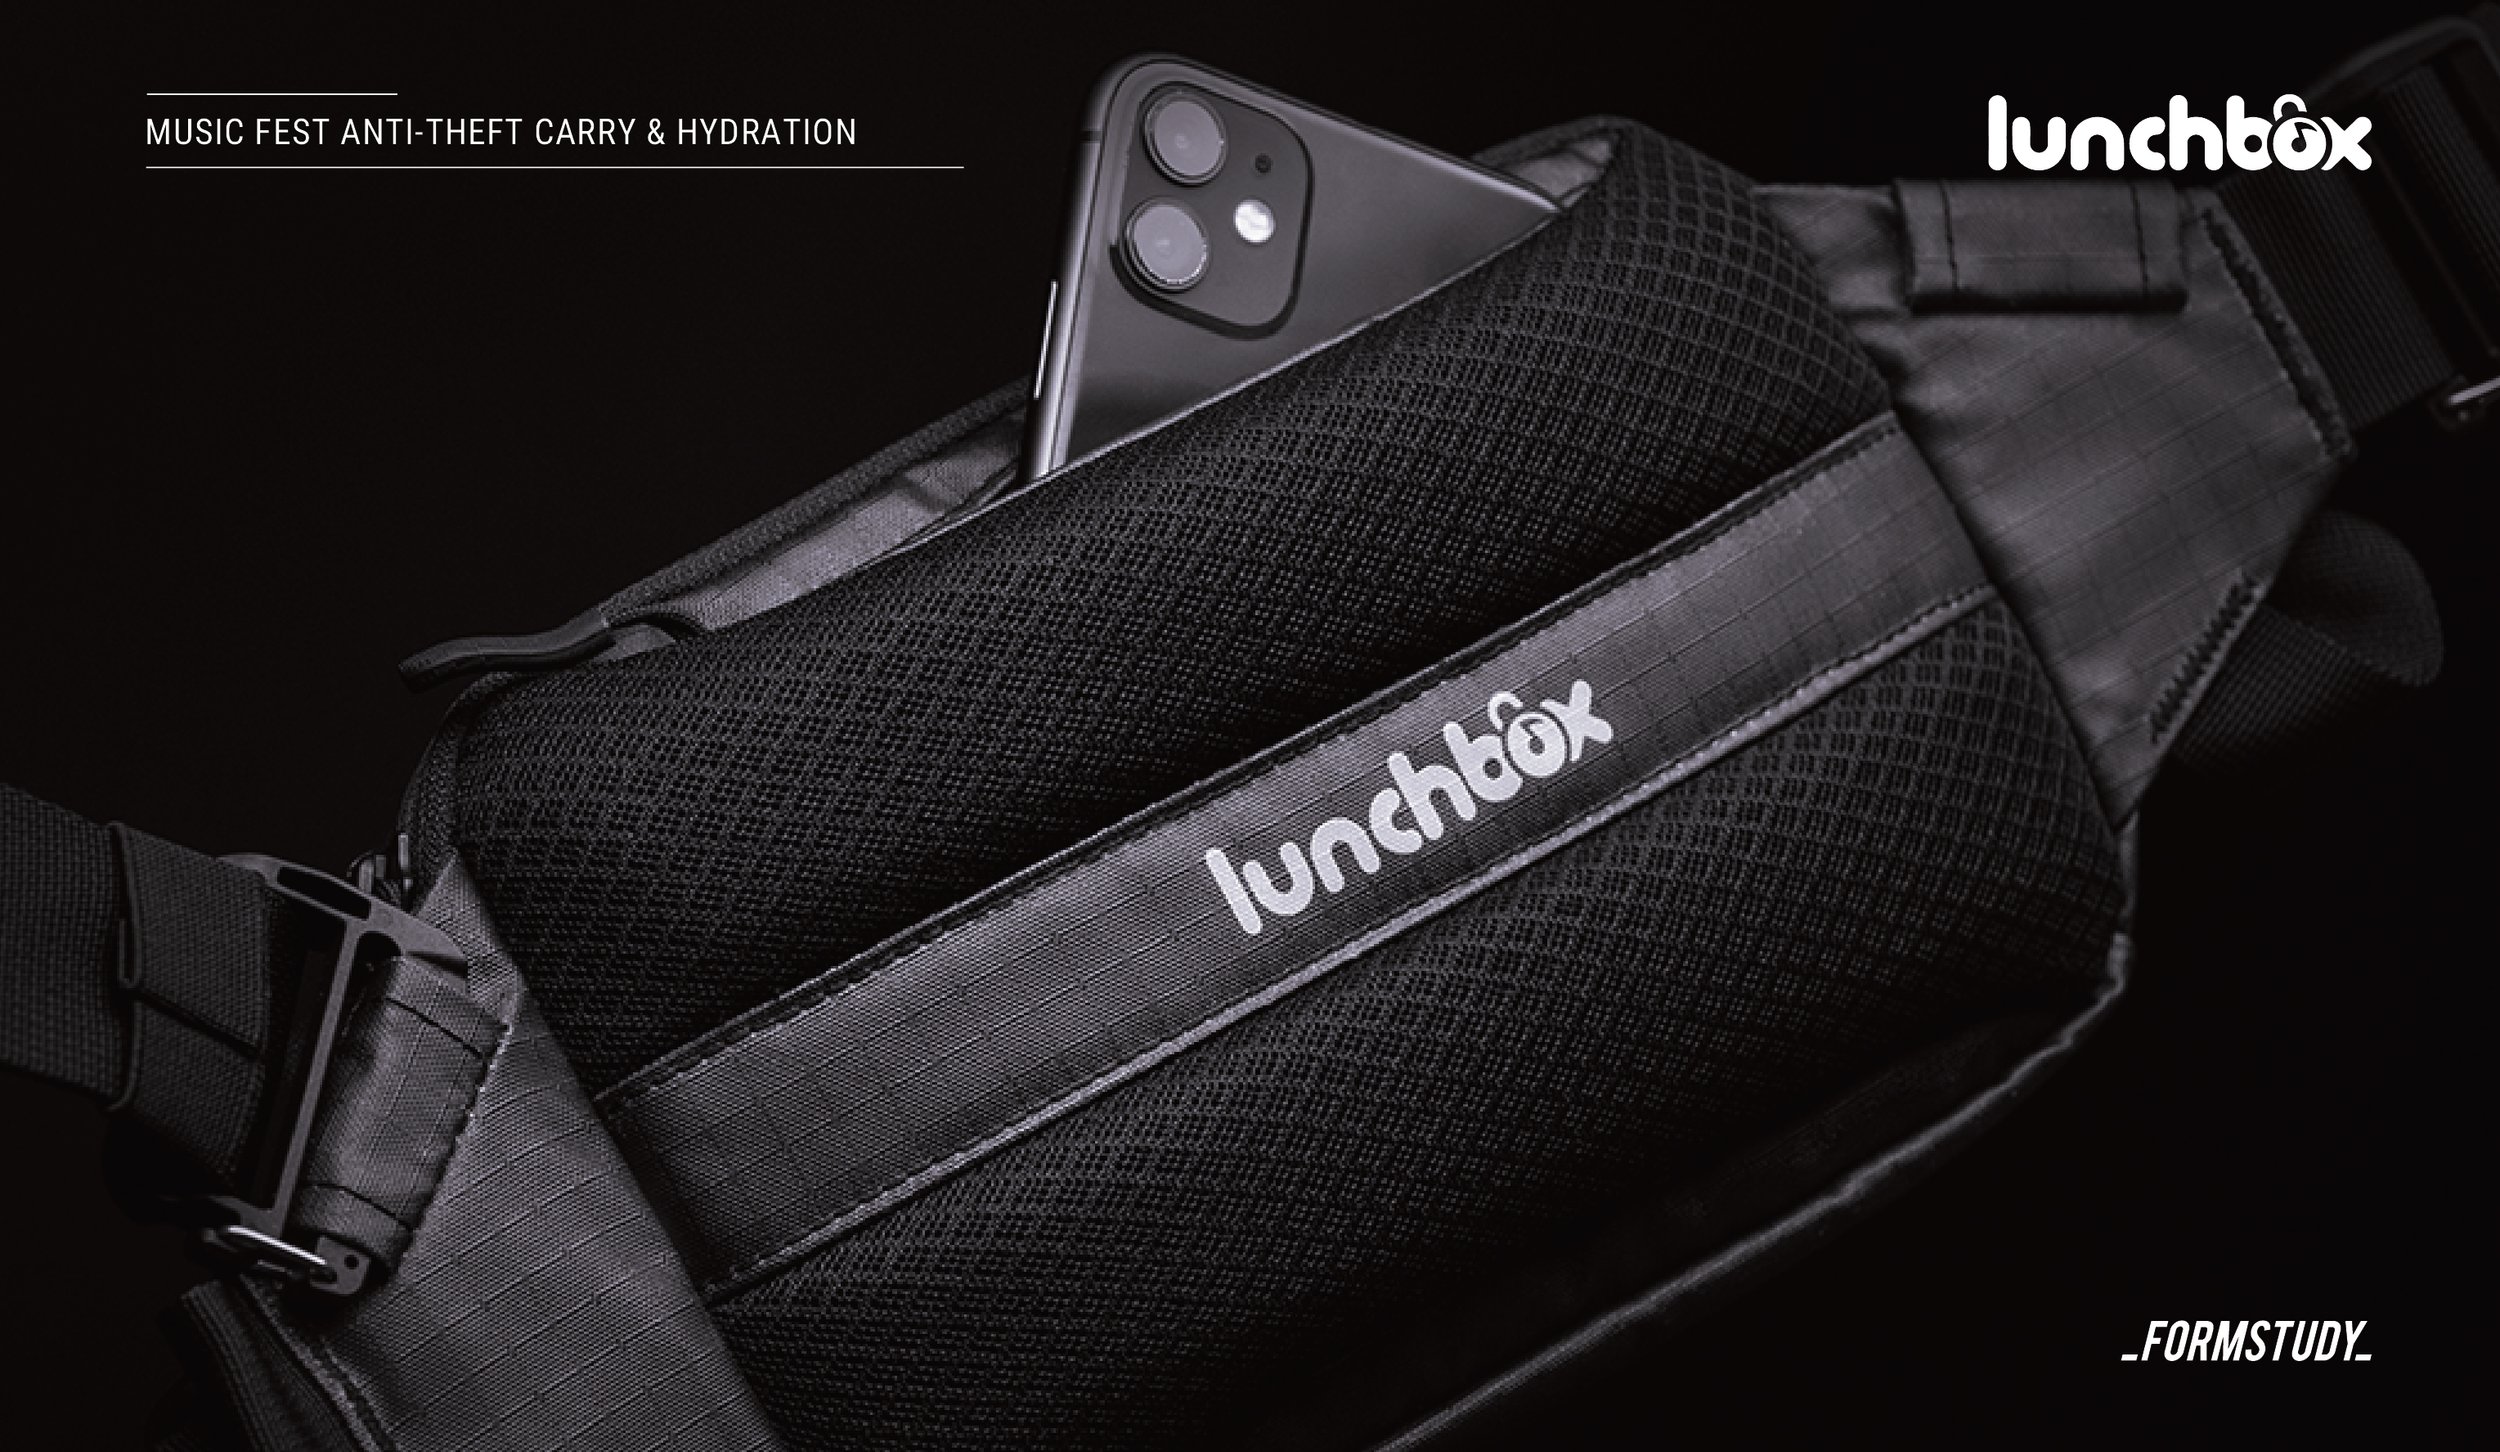 Lunchbox behance 02-01.jpg